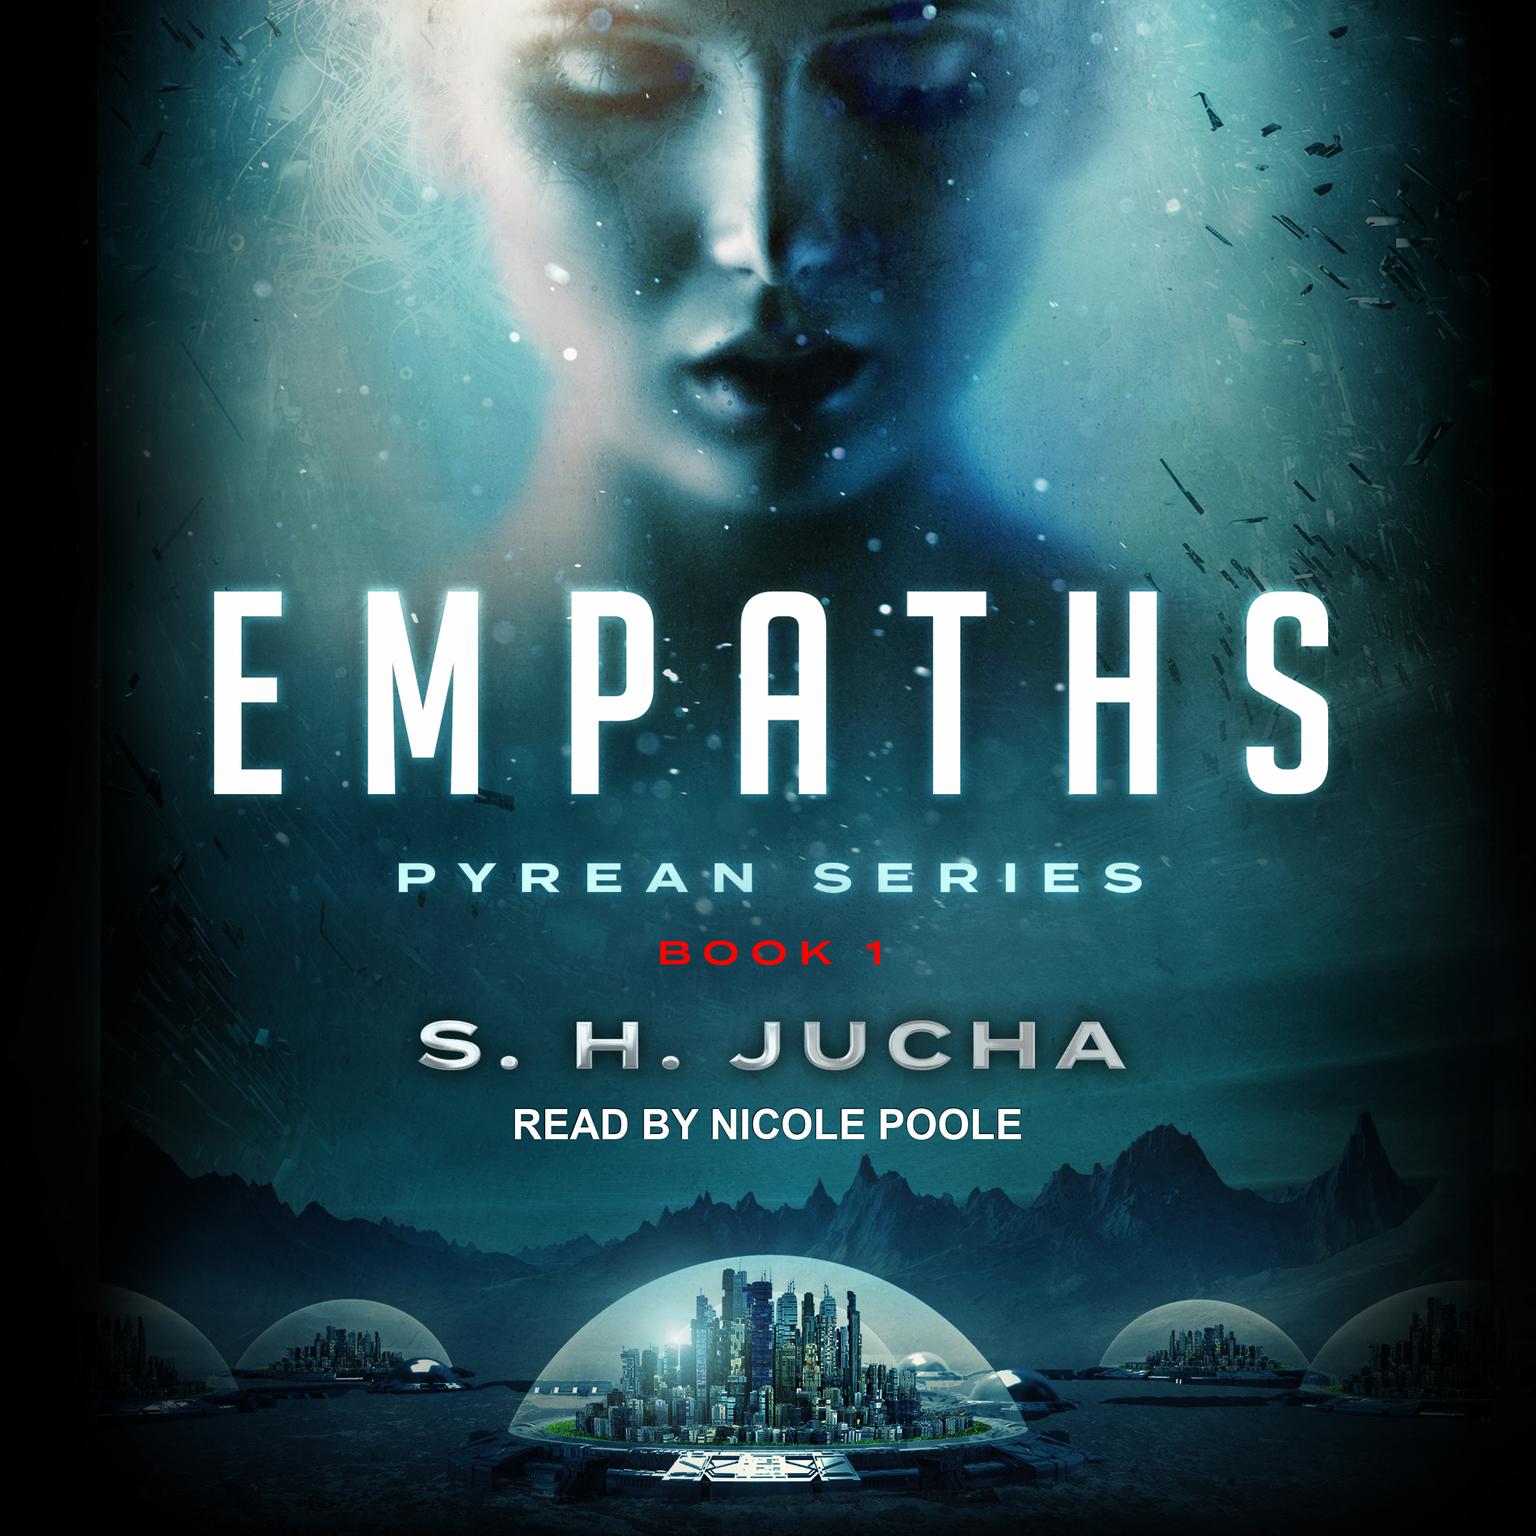 Empaths Audiobook, by S. H.  Jucha